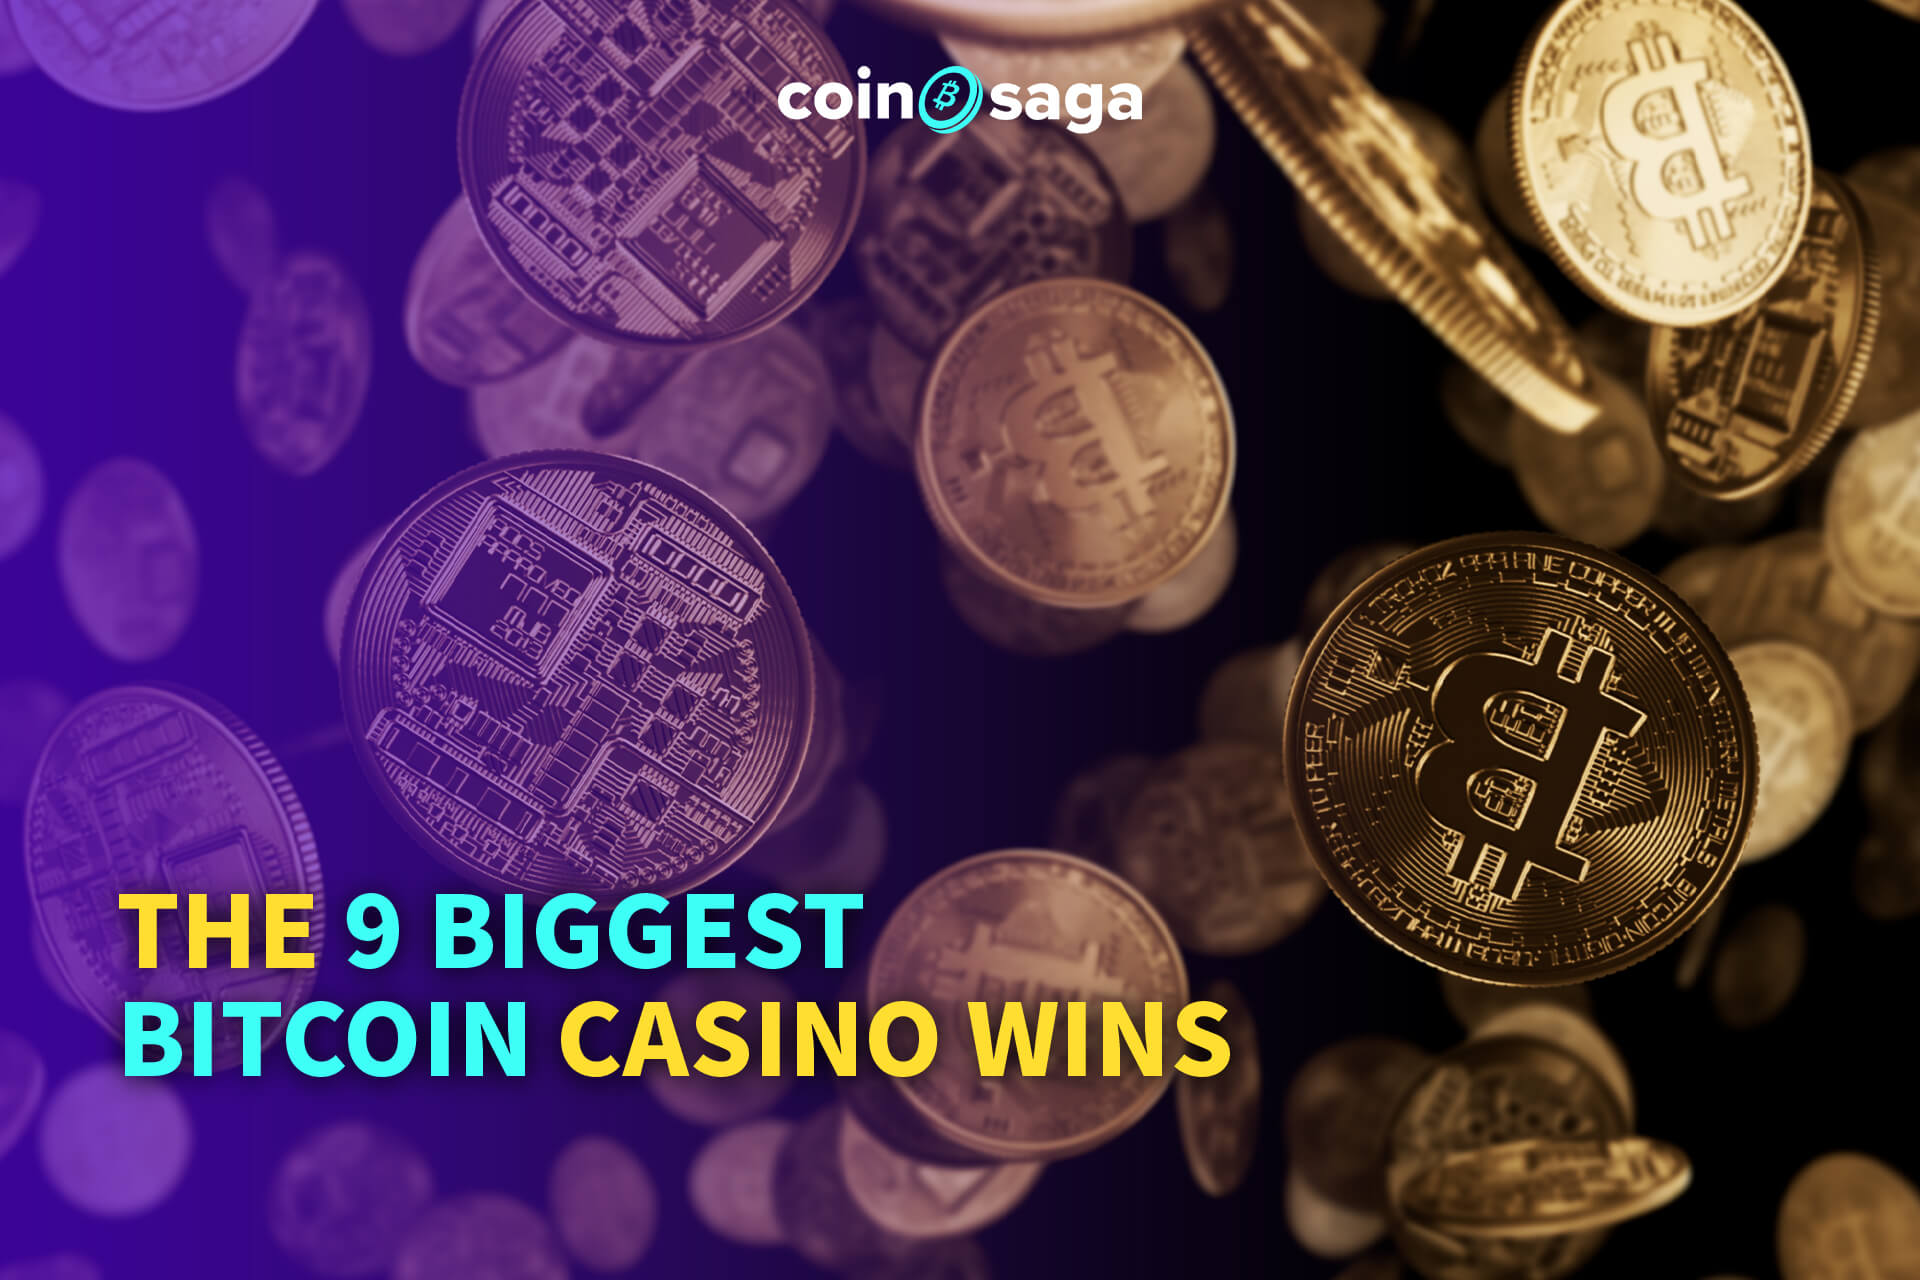 9 Biggest Bitcoin Casino Wins